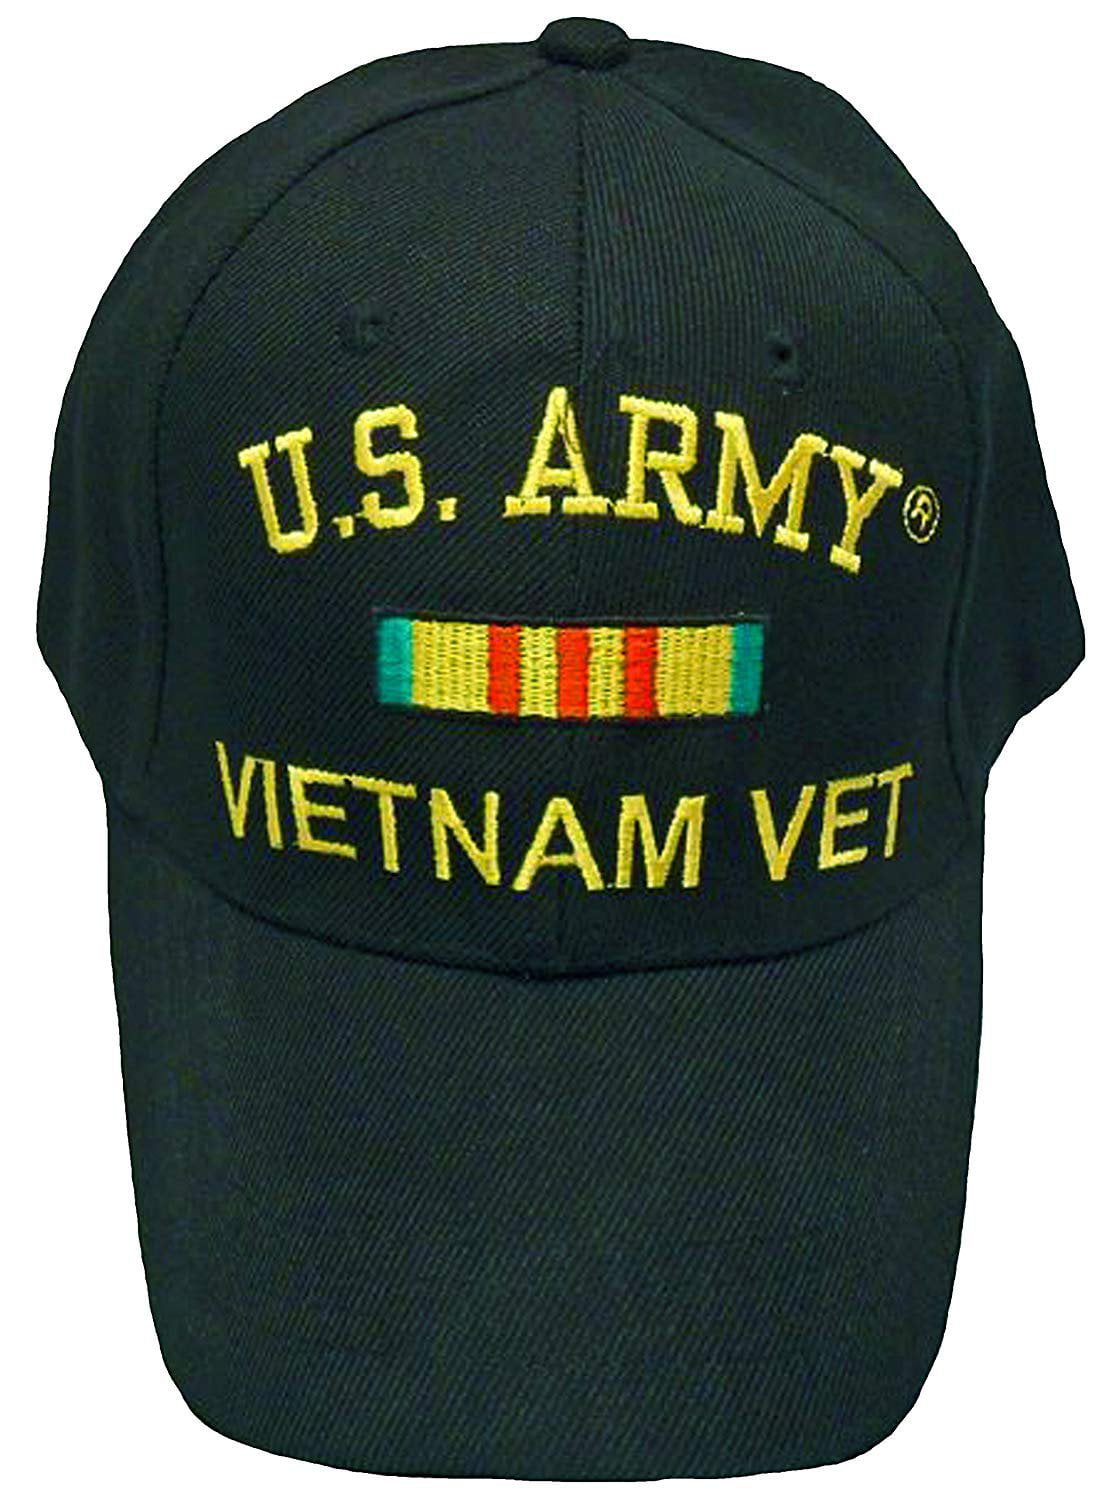 New Black US Navy Vietnam Veteran Hat Baseball Ball Cap Military